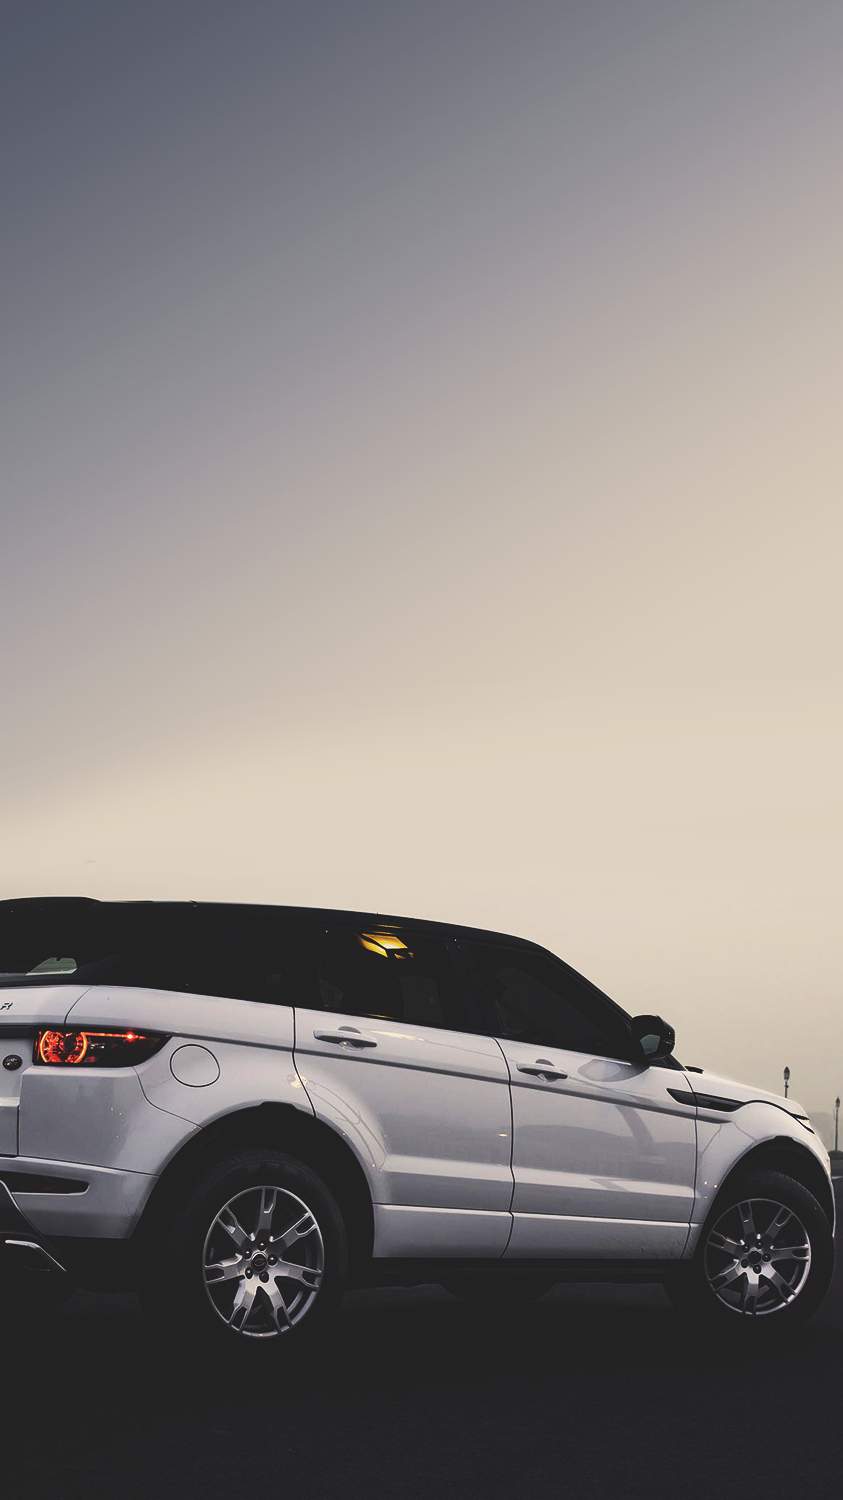 Range Rover Evoque Wallpapers